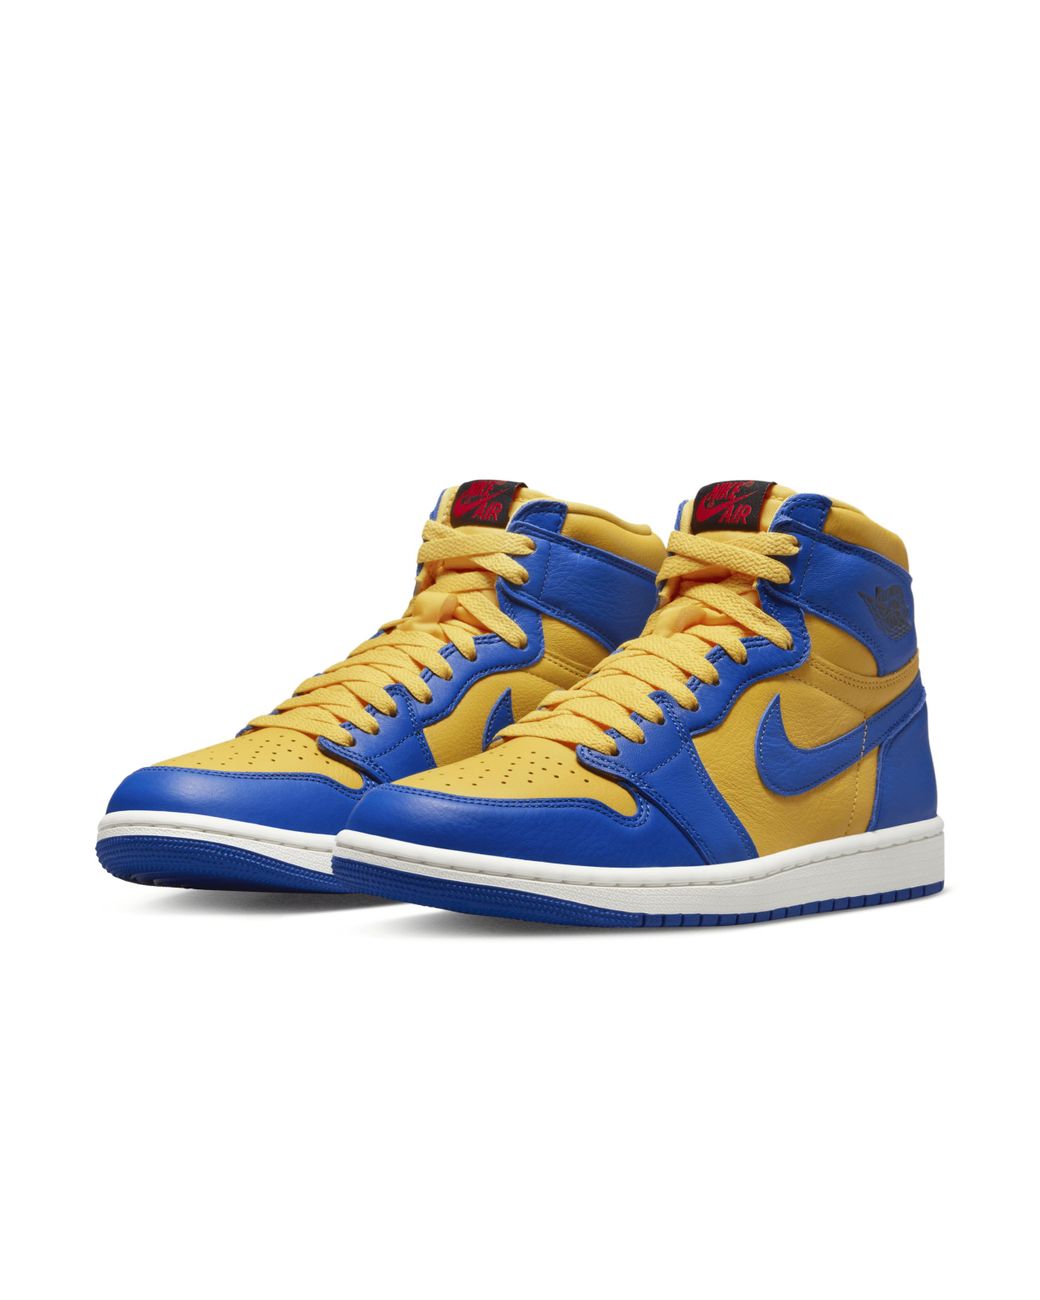 Nike Air Jordan 1 Retro High Og Shoes in Blue | Lyst